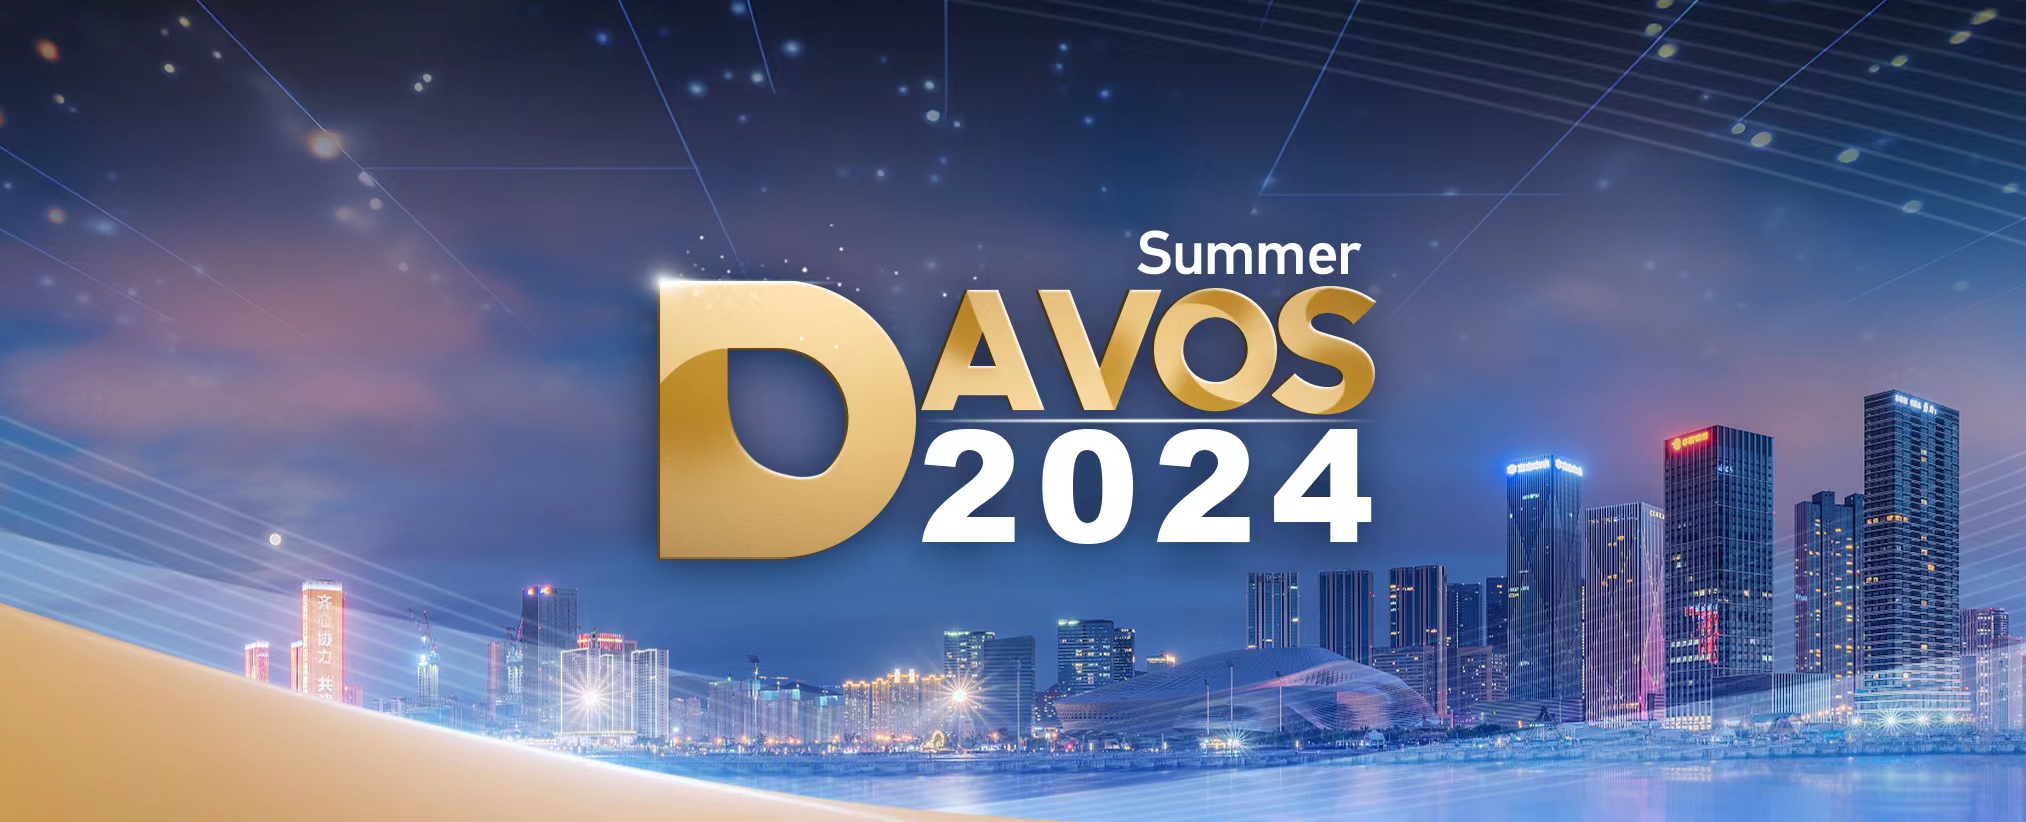 Summer Davos 2024